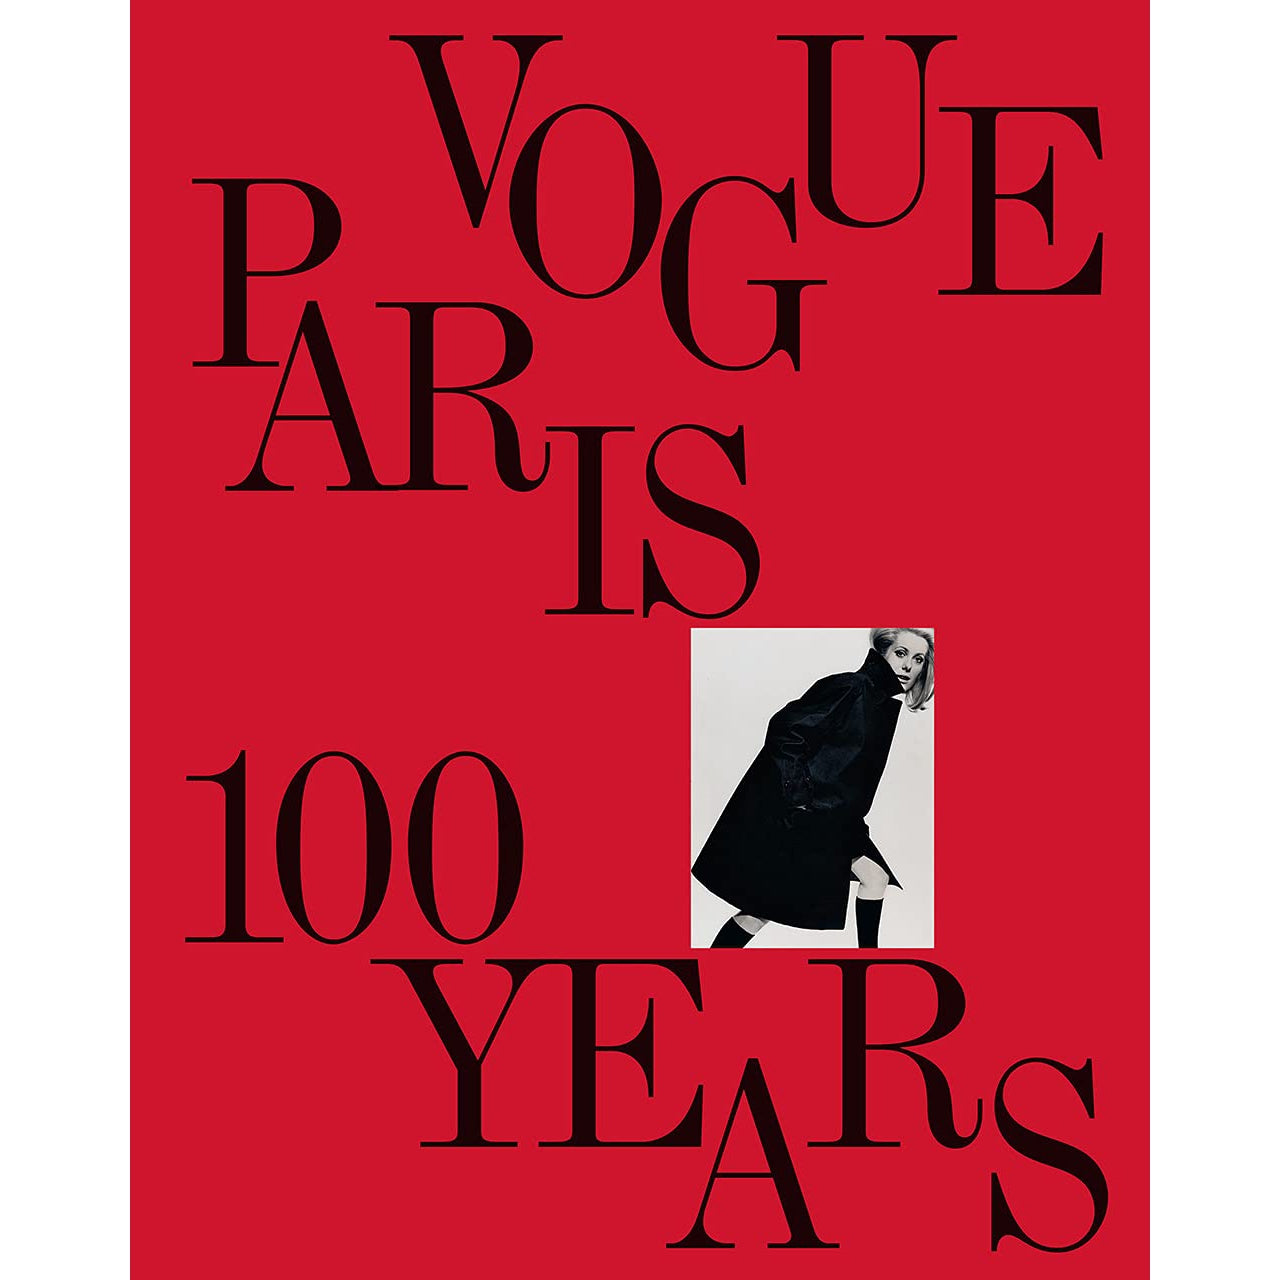 Vogue Paris: 100 Years